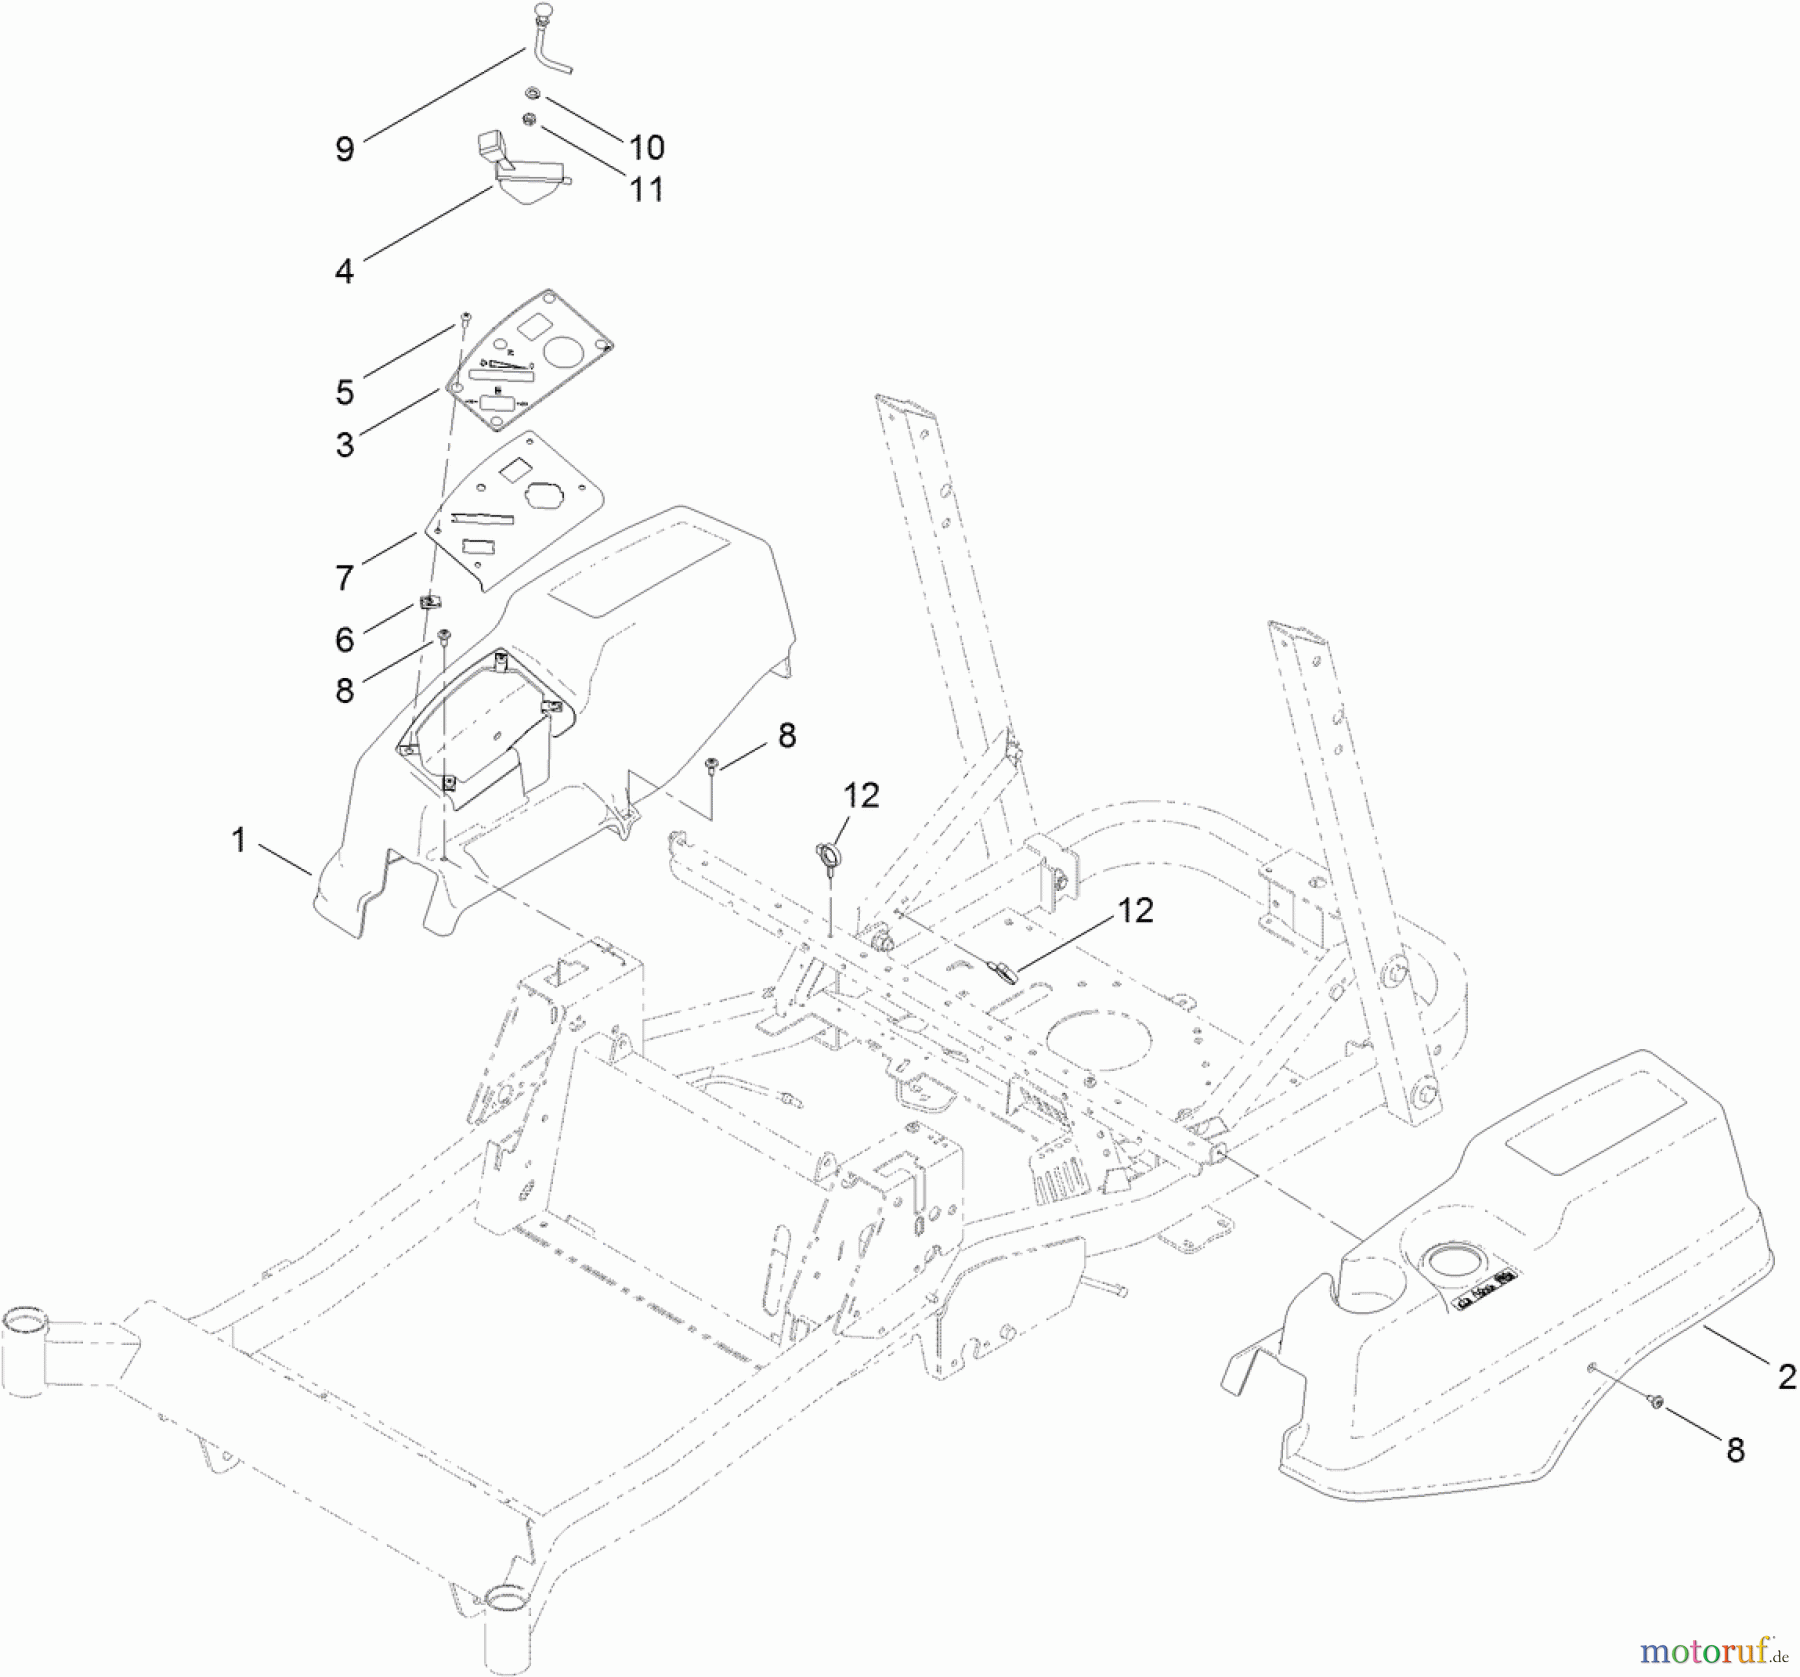  Toro Neu Mowers, Zero-Turn 74843 (ZX6020) - Toro TITAN ZX6020 Zero-Turn-Radius Riding Mower, 2011 (311000001-311999999) CONTROL PANEL AND BODY STYLING POD ASSEMBLY